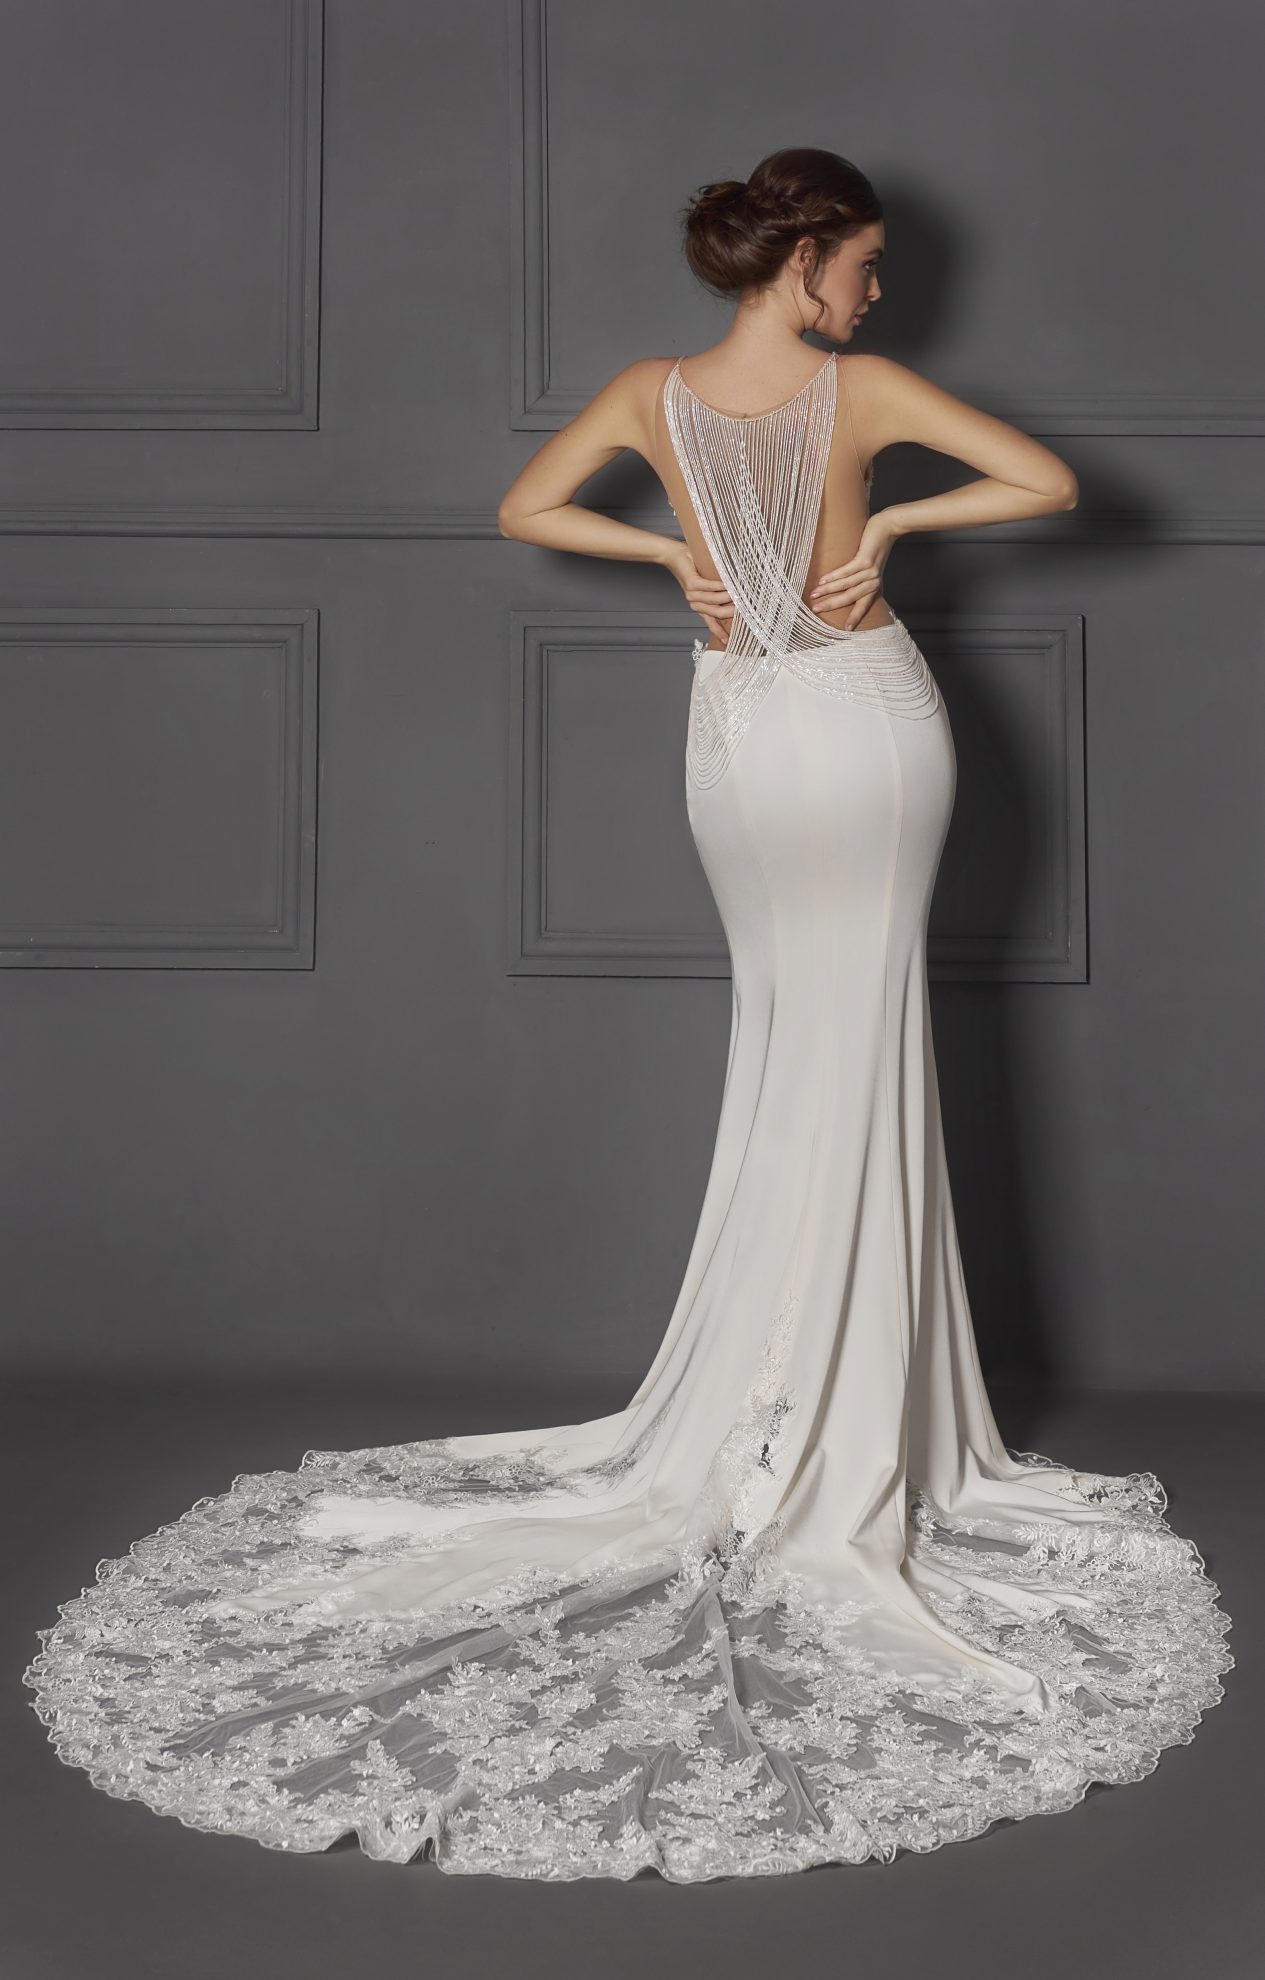 Danielle Couture wedding dress